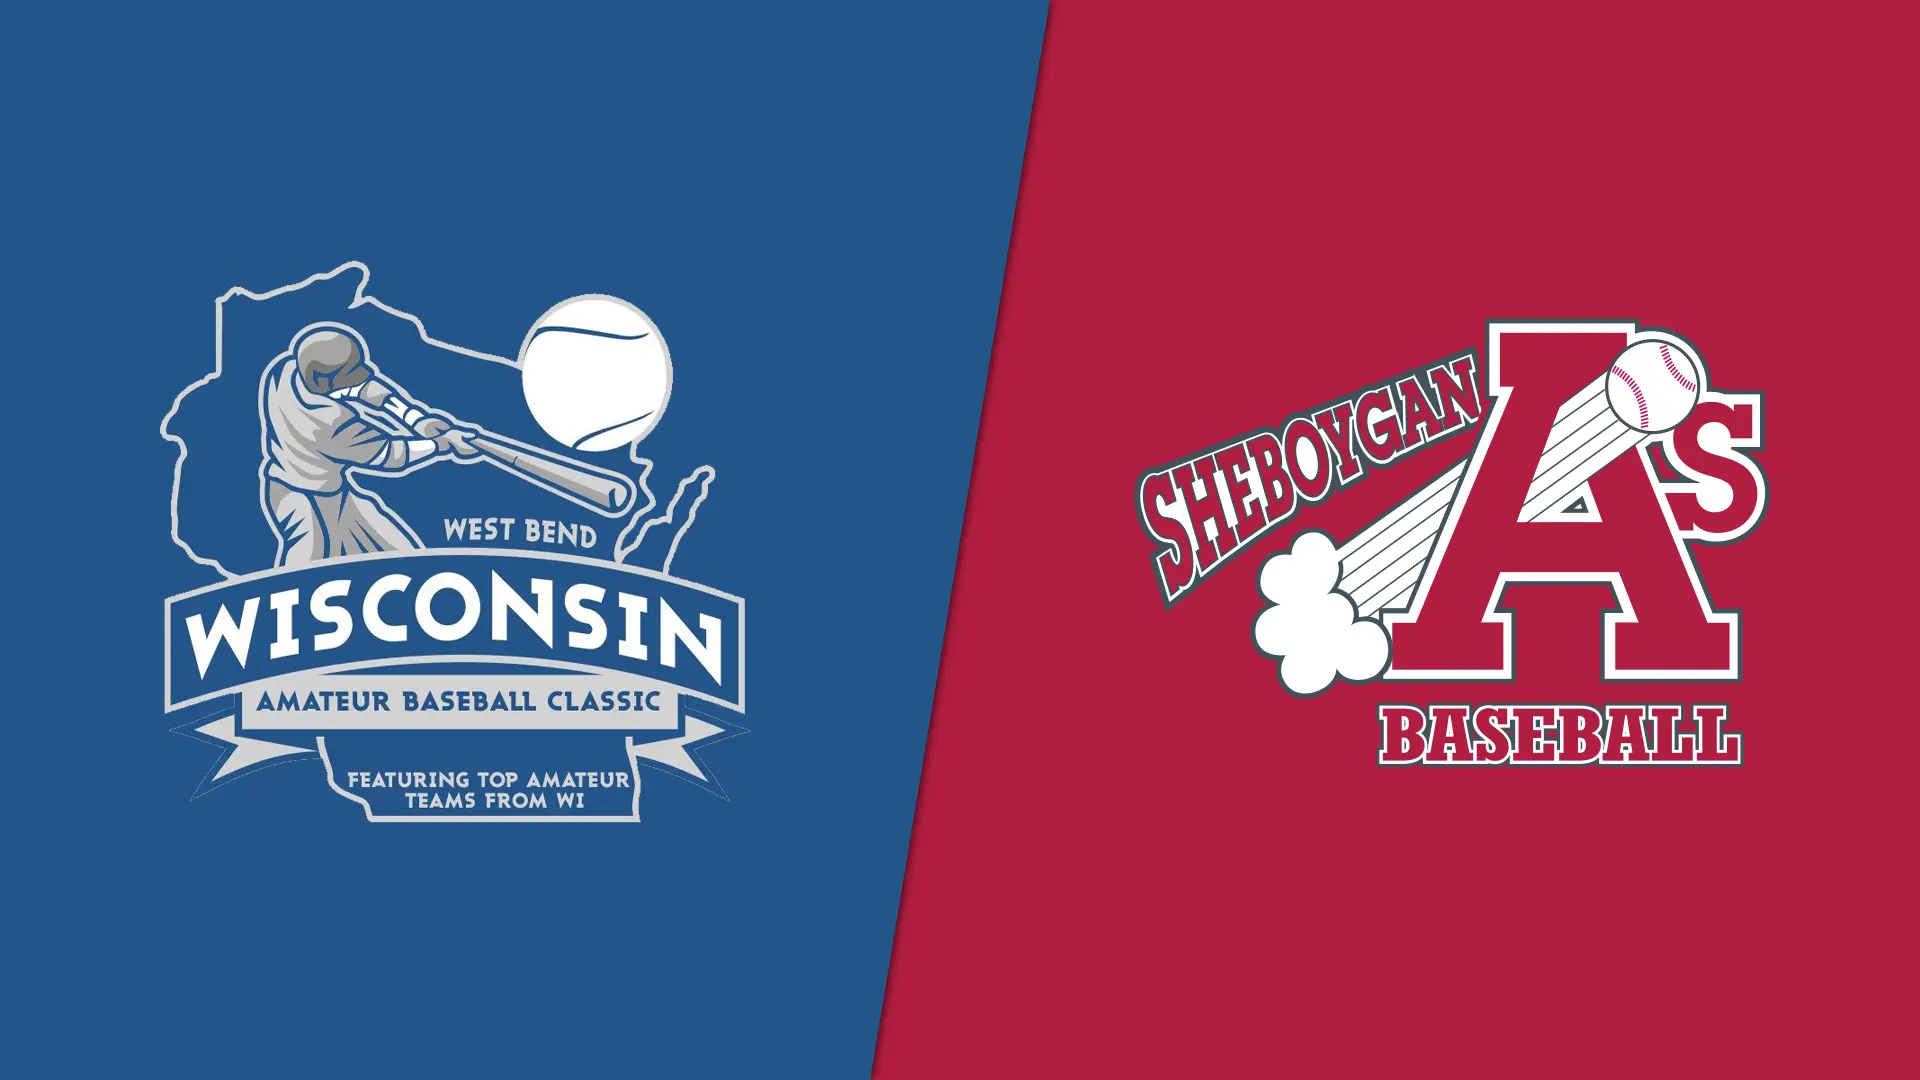 Sheboygan A's vs. Wisconsin Amateur Baseball Classic